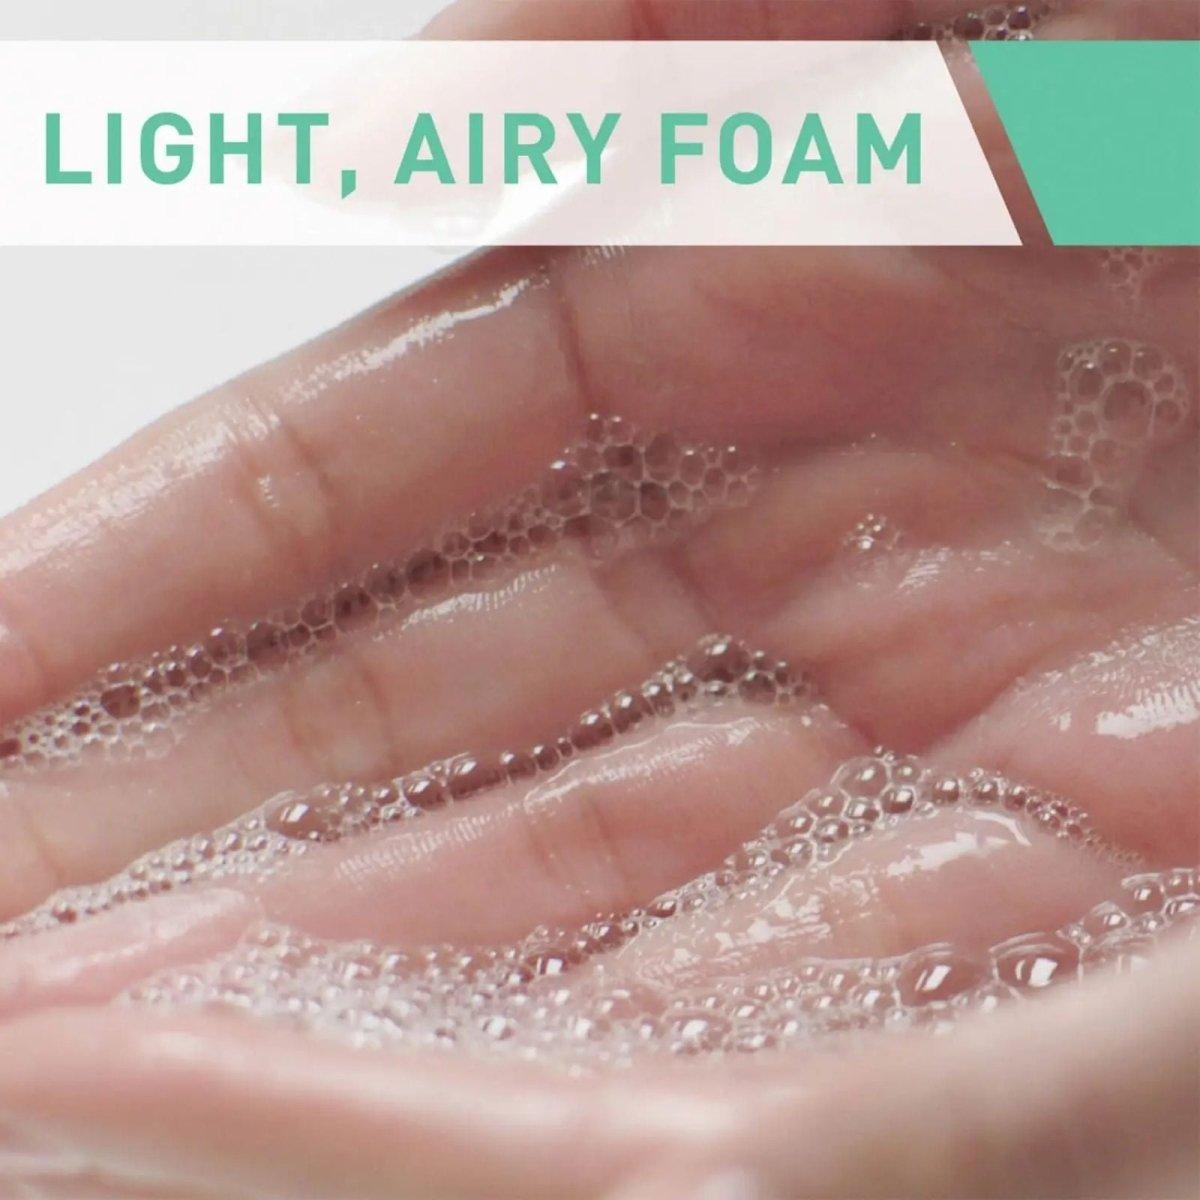 CeraVe | Foaming Facial Cleanser | 236ml - DG International Ventures Limited